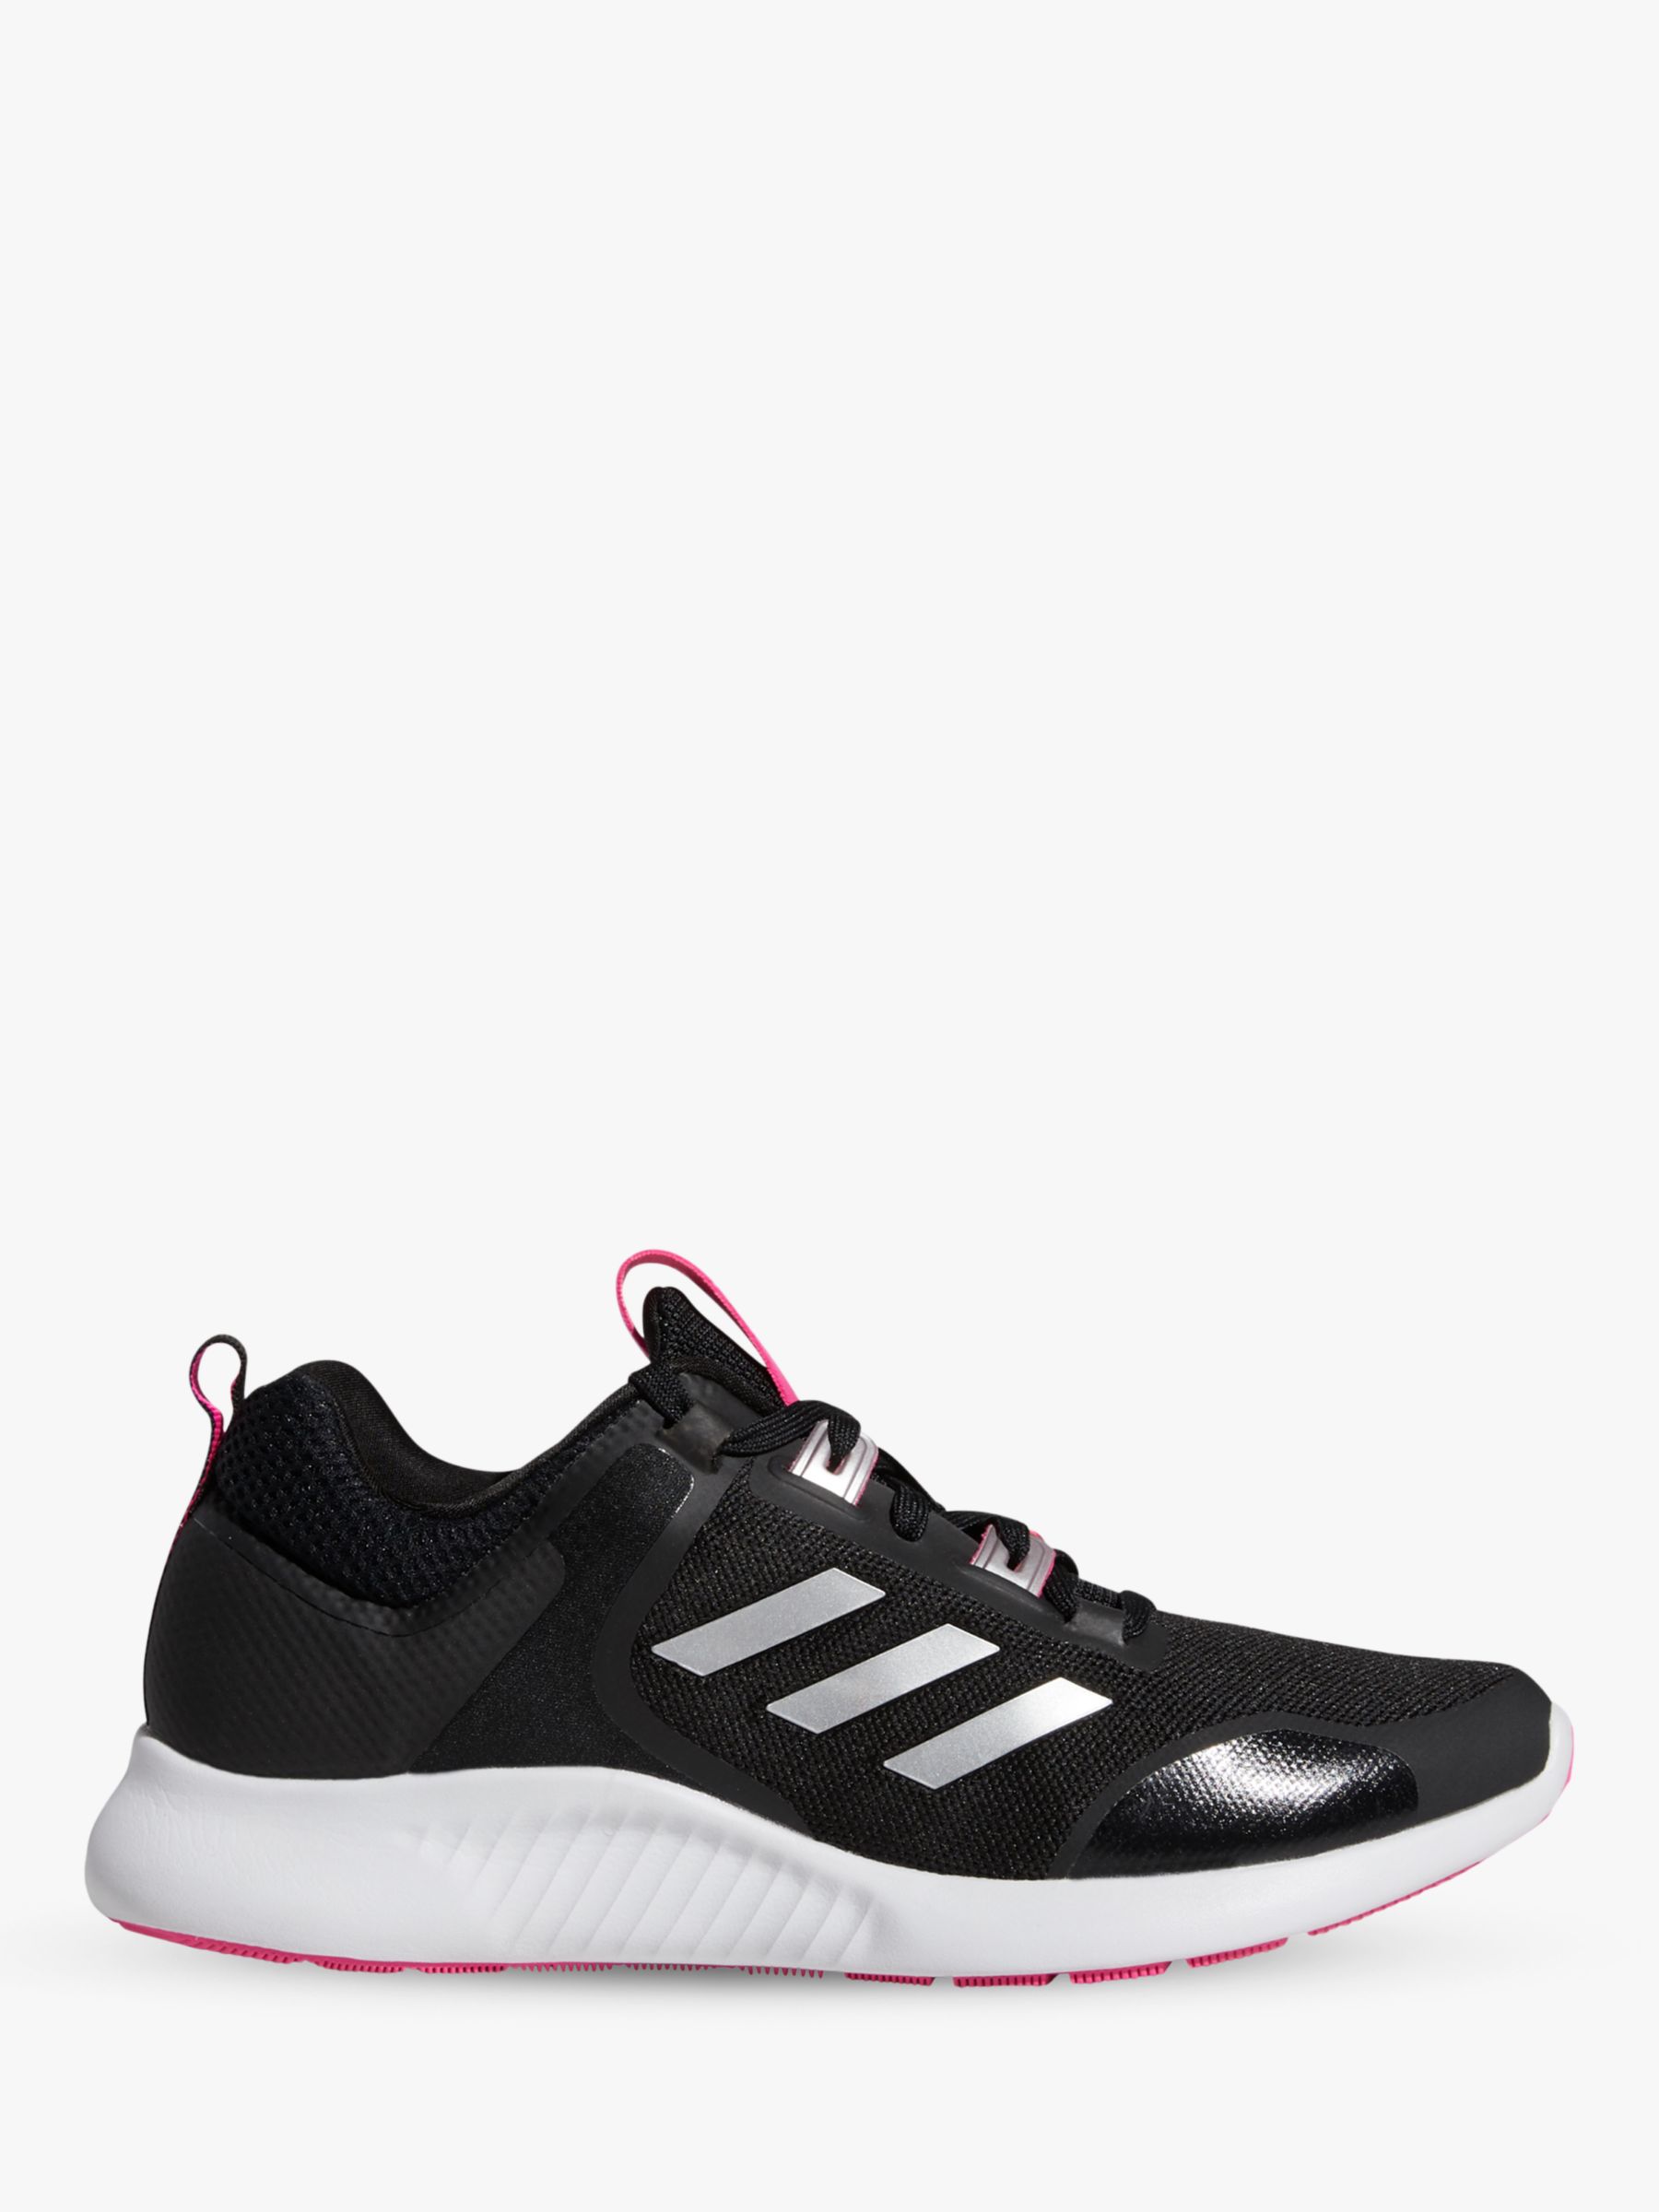 adidas Edgebounce 1.5 Women's Running Shoes, Core Black/Silver Met./Shock Pink